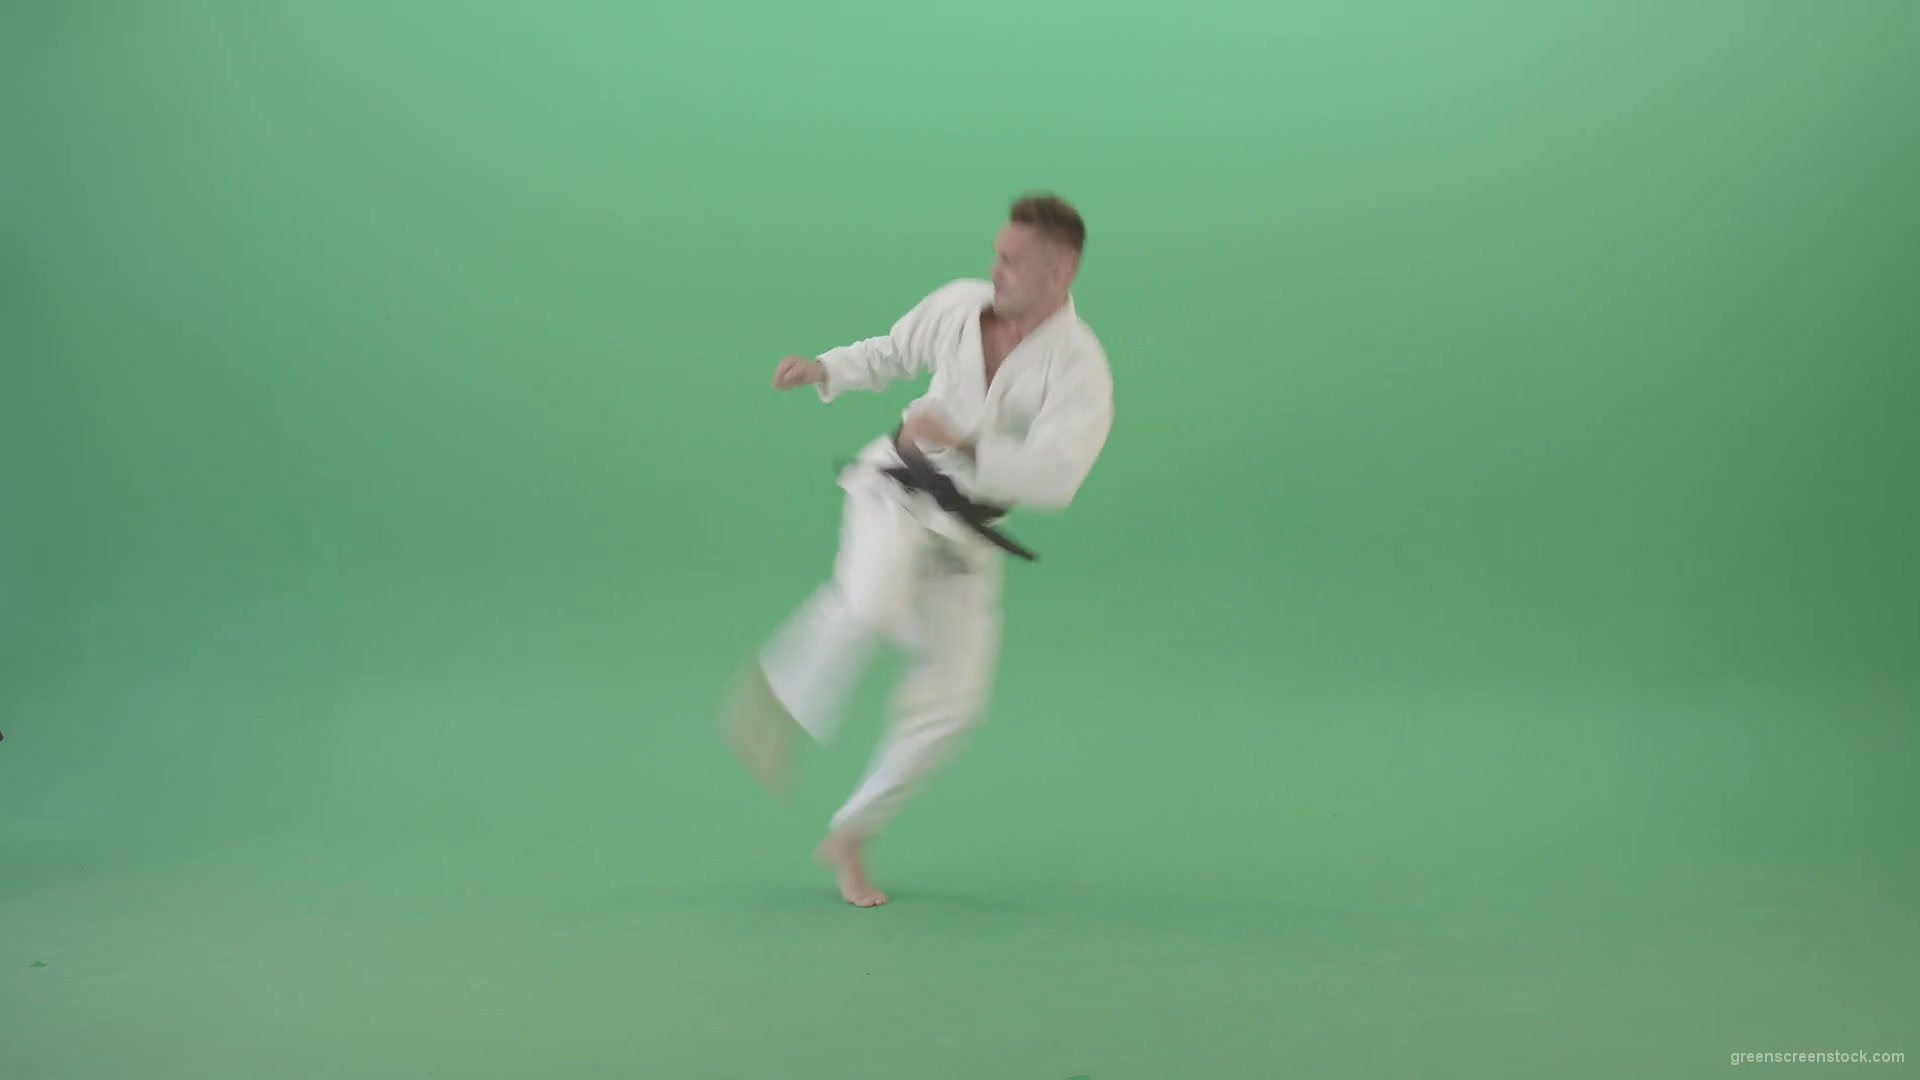 Mortal-Kombat-by-Karate-Ju-Jutsu-trainer-sportsman-isolated-on-green-screen-4K-Video-Footage-1920_005 Green Screen Stock